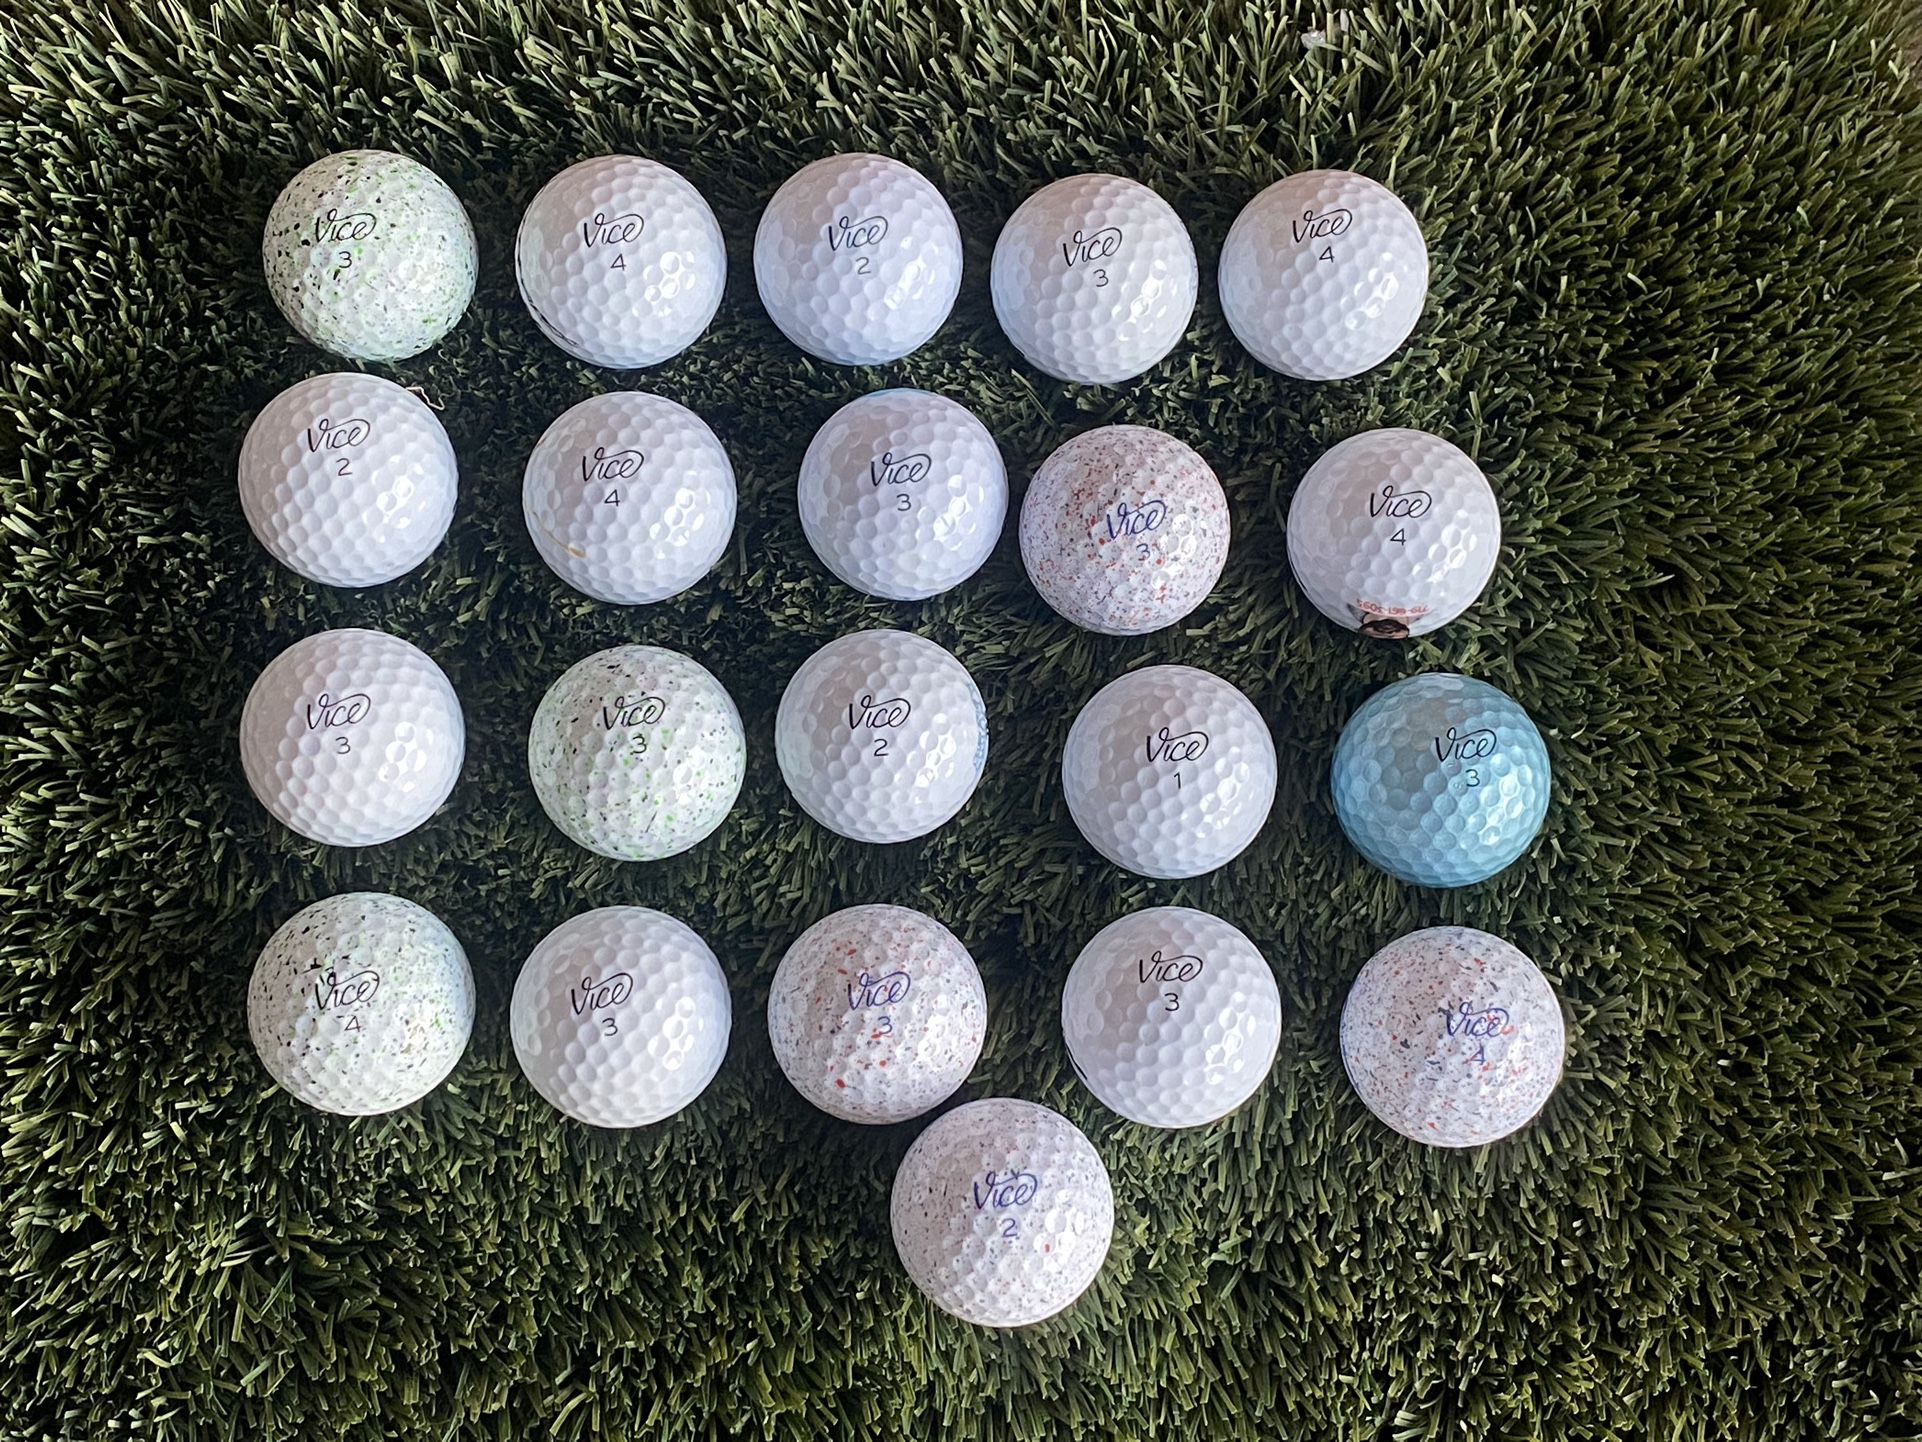 21 Vice Golf Balls 